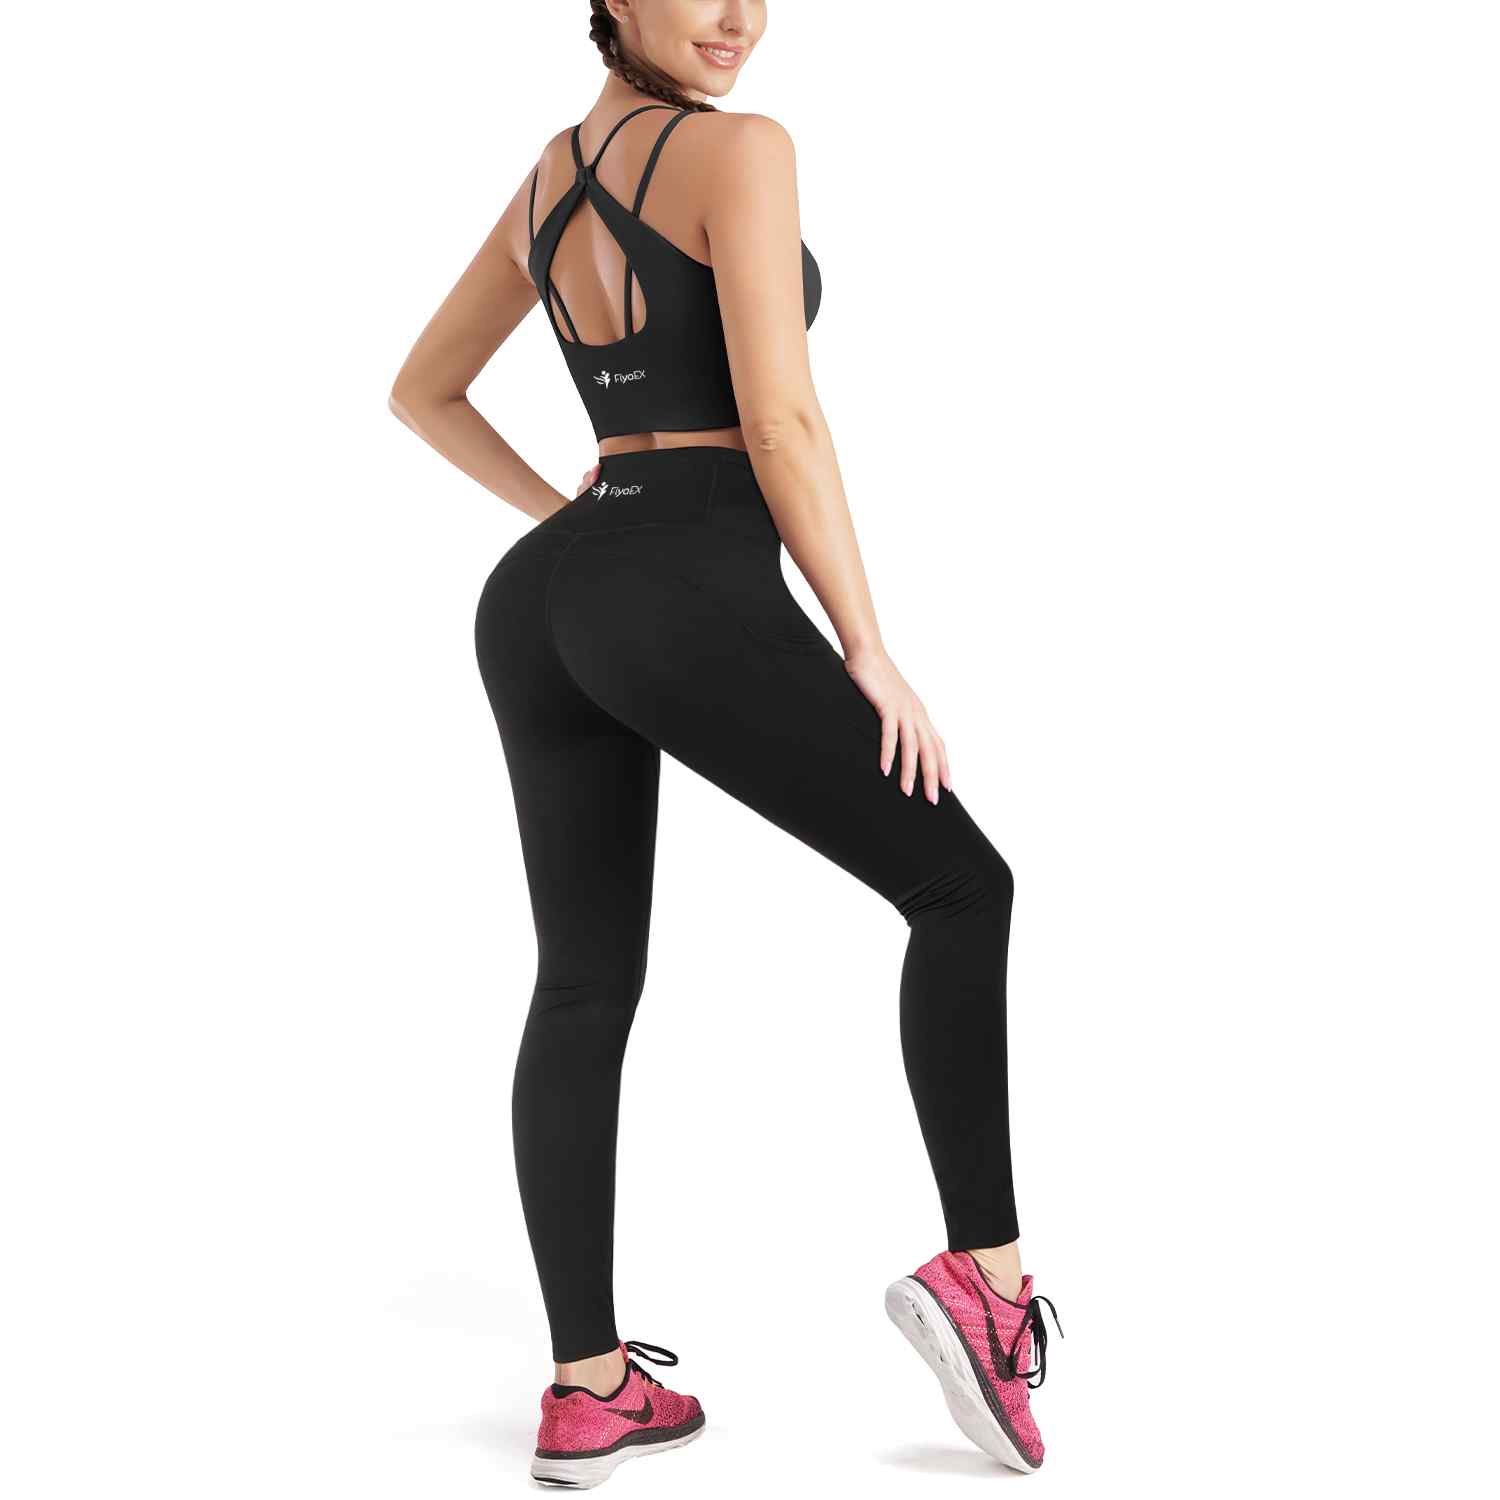 Women's Yoga Wear Sportswear Gym Training Set Running Sport Sports Bra Black  Yoga Pants Leggings Workout Set Fitness Clothes Xl - Yoga Sets - AliExpress